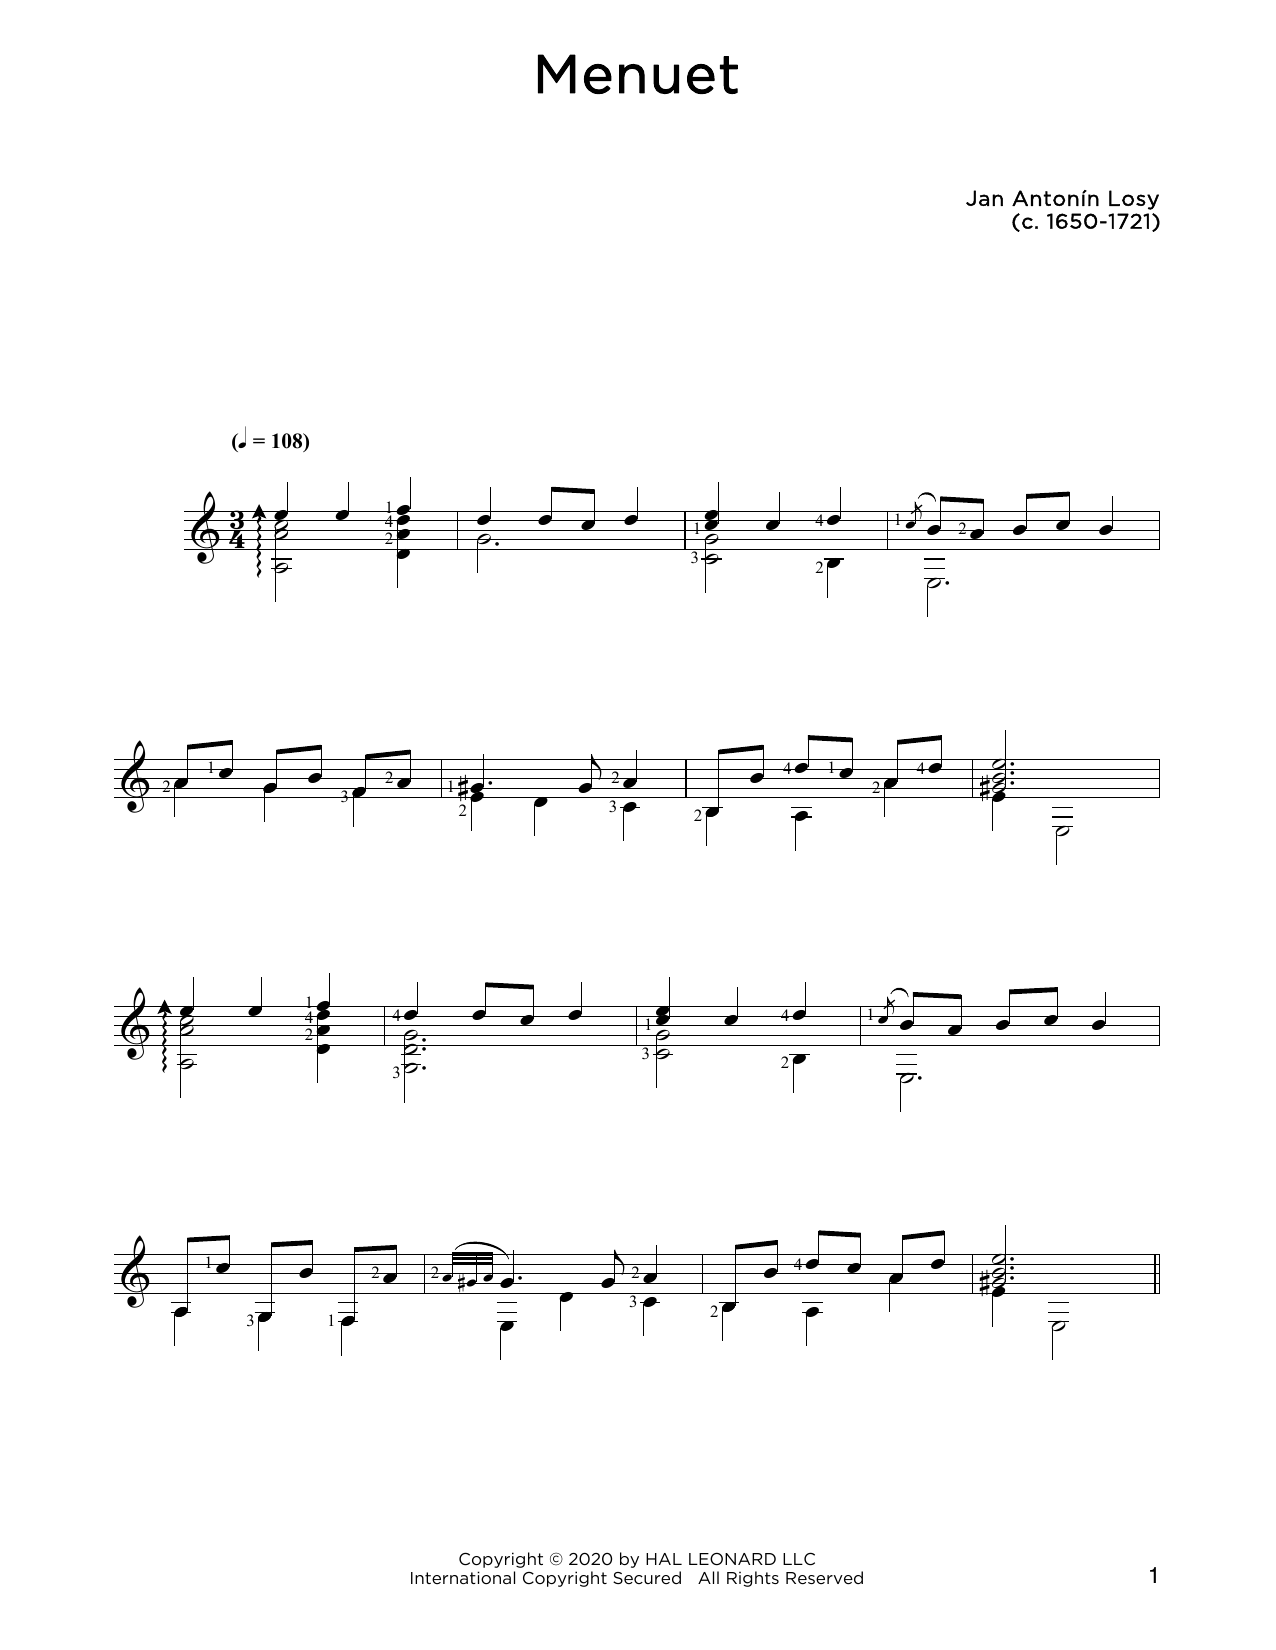 Jan Antonin Losey Menuet Sheet Music Notes & Chords for Solo Guitar - Download or Print PDF